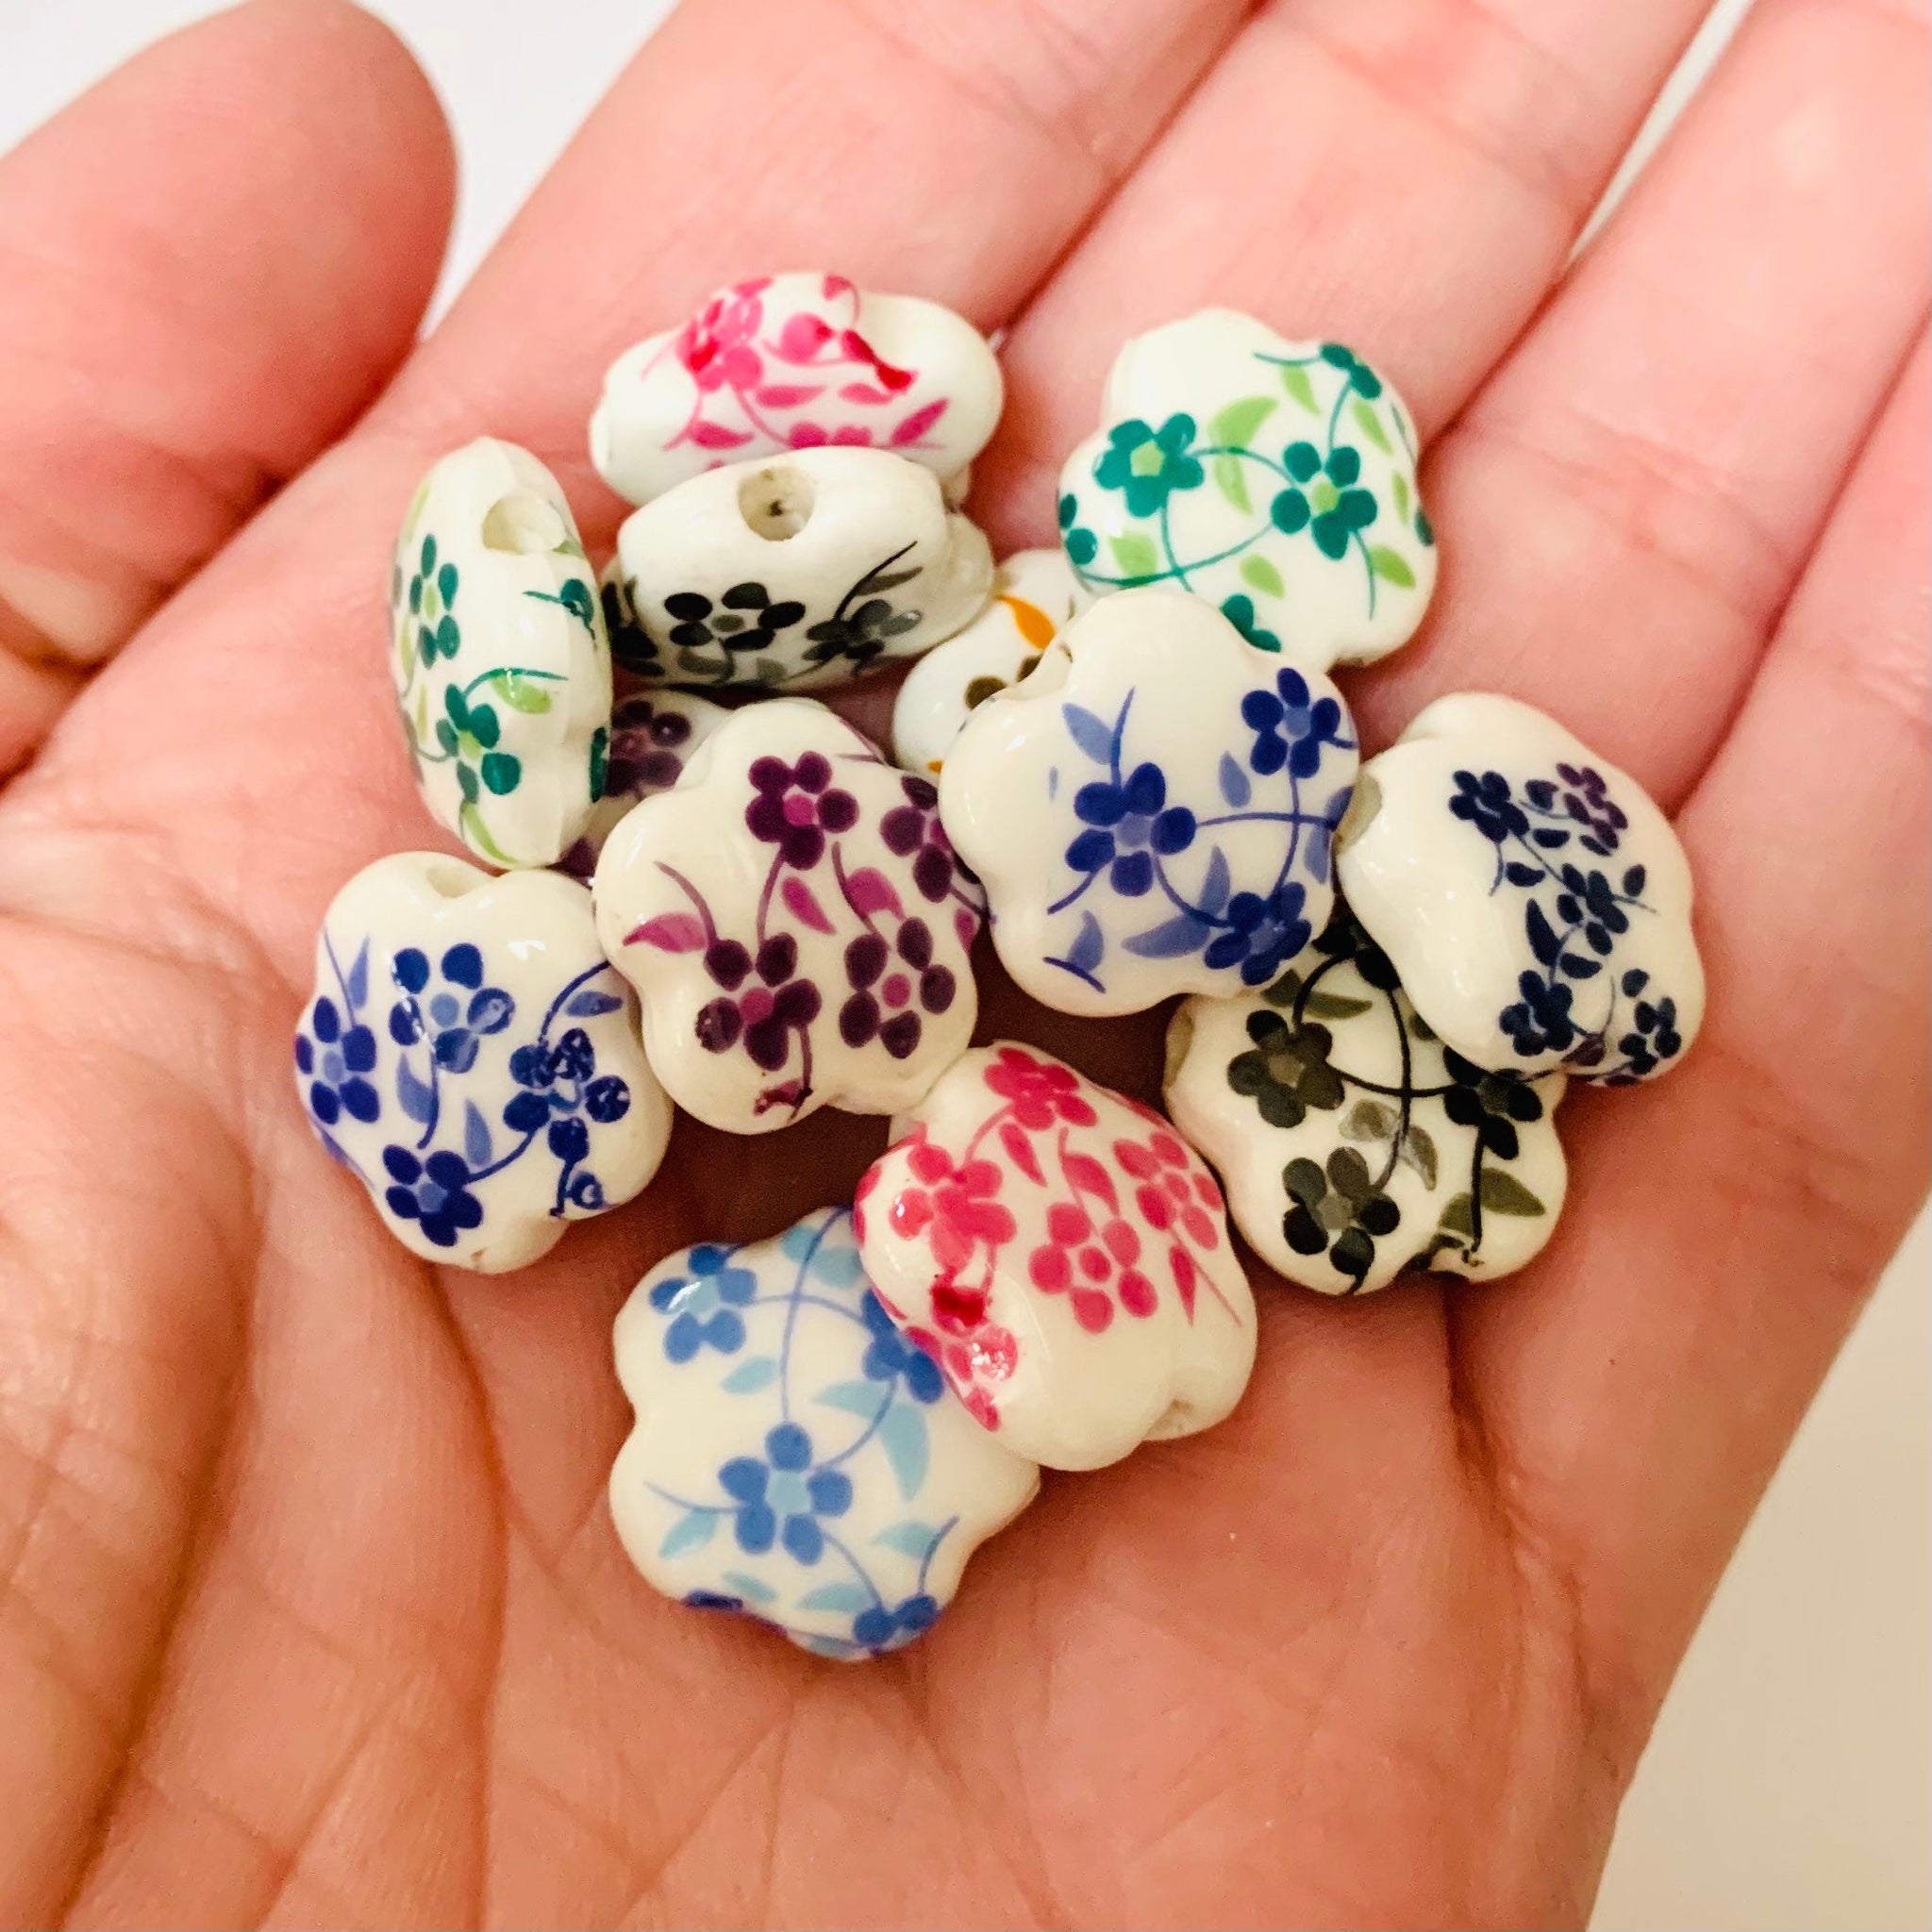 5 Ceramic Flower Shaped Beads - 15mm